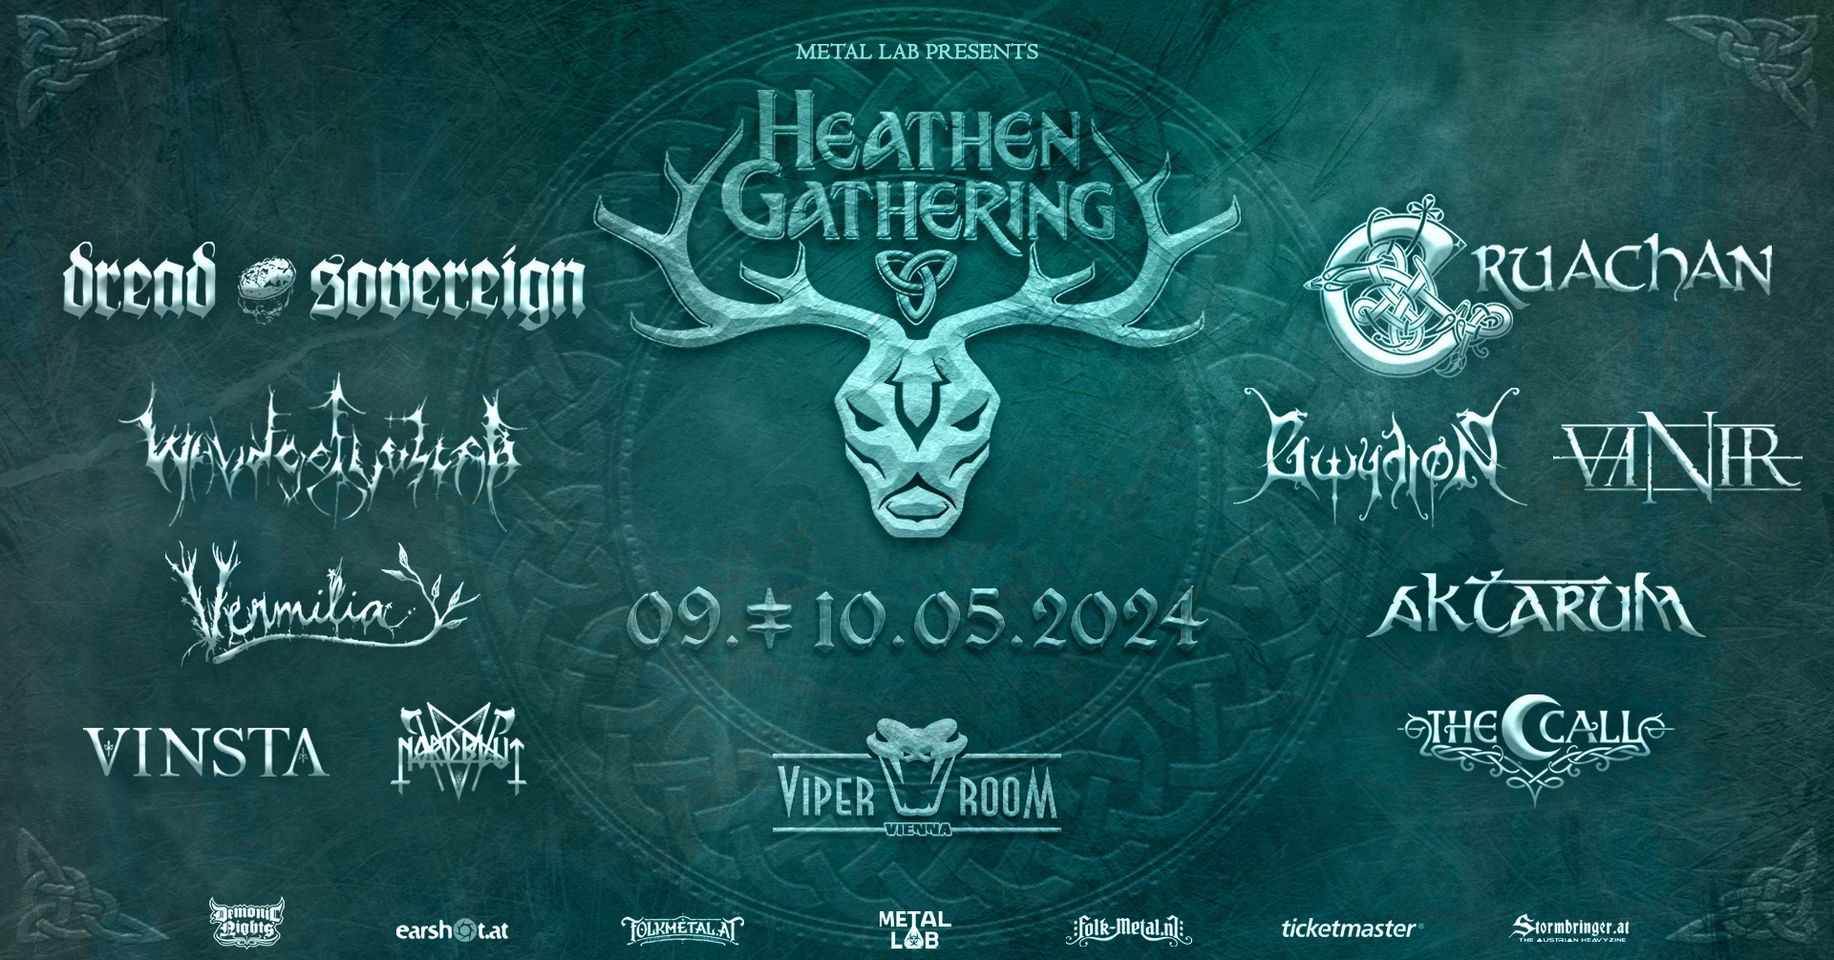 Heathen Gathering Festival 2024 am 9. May 2024 @ Viper Room.